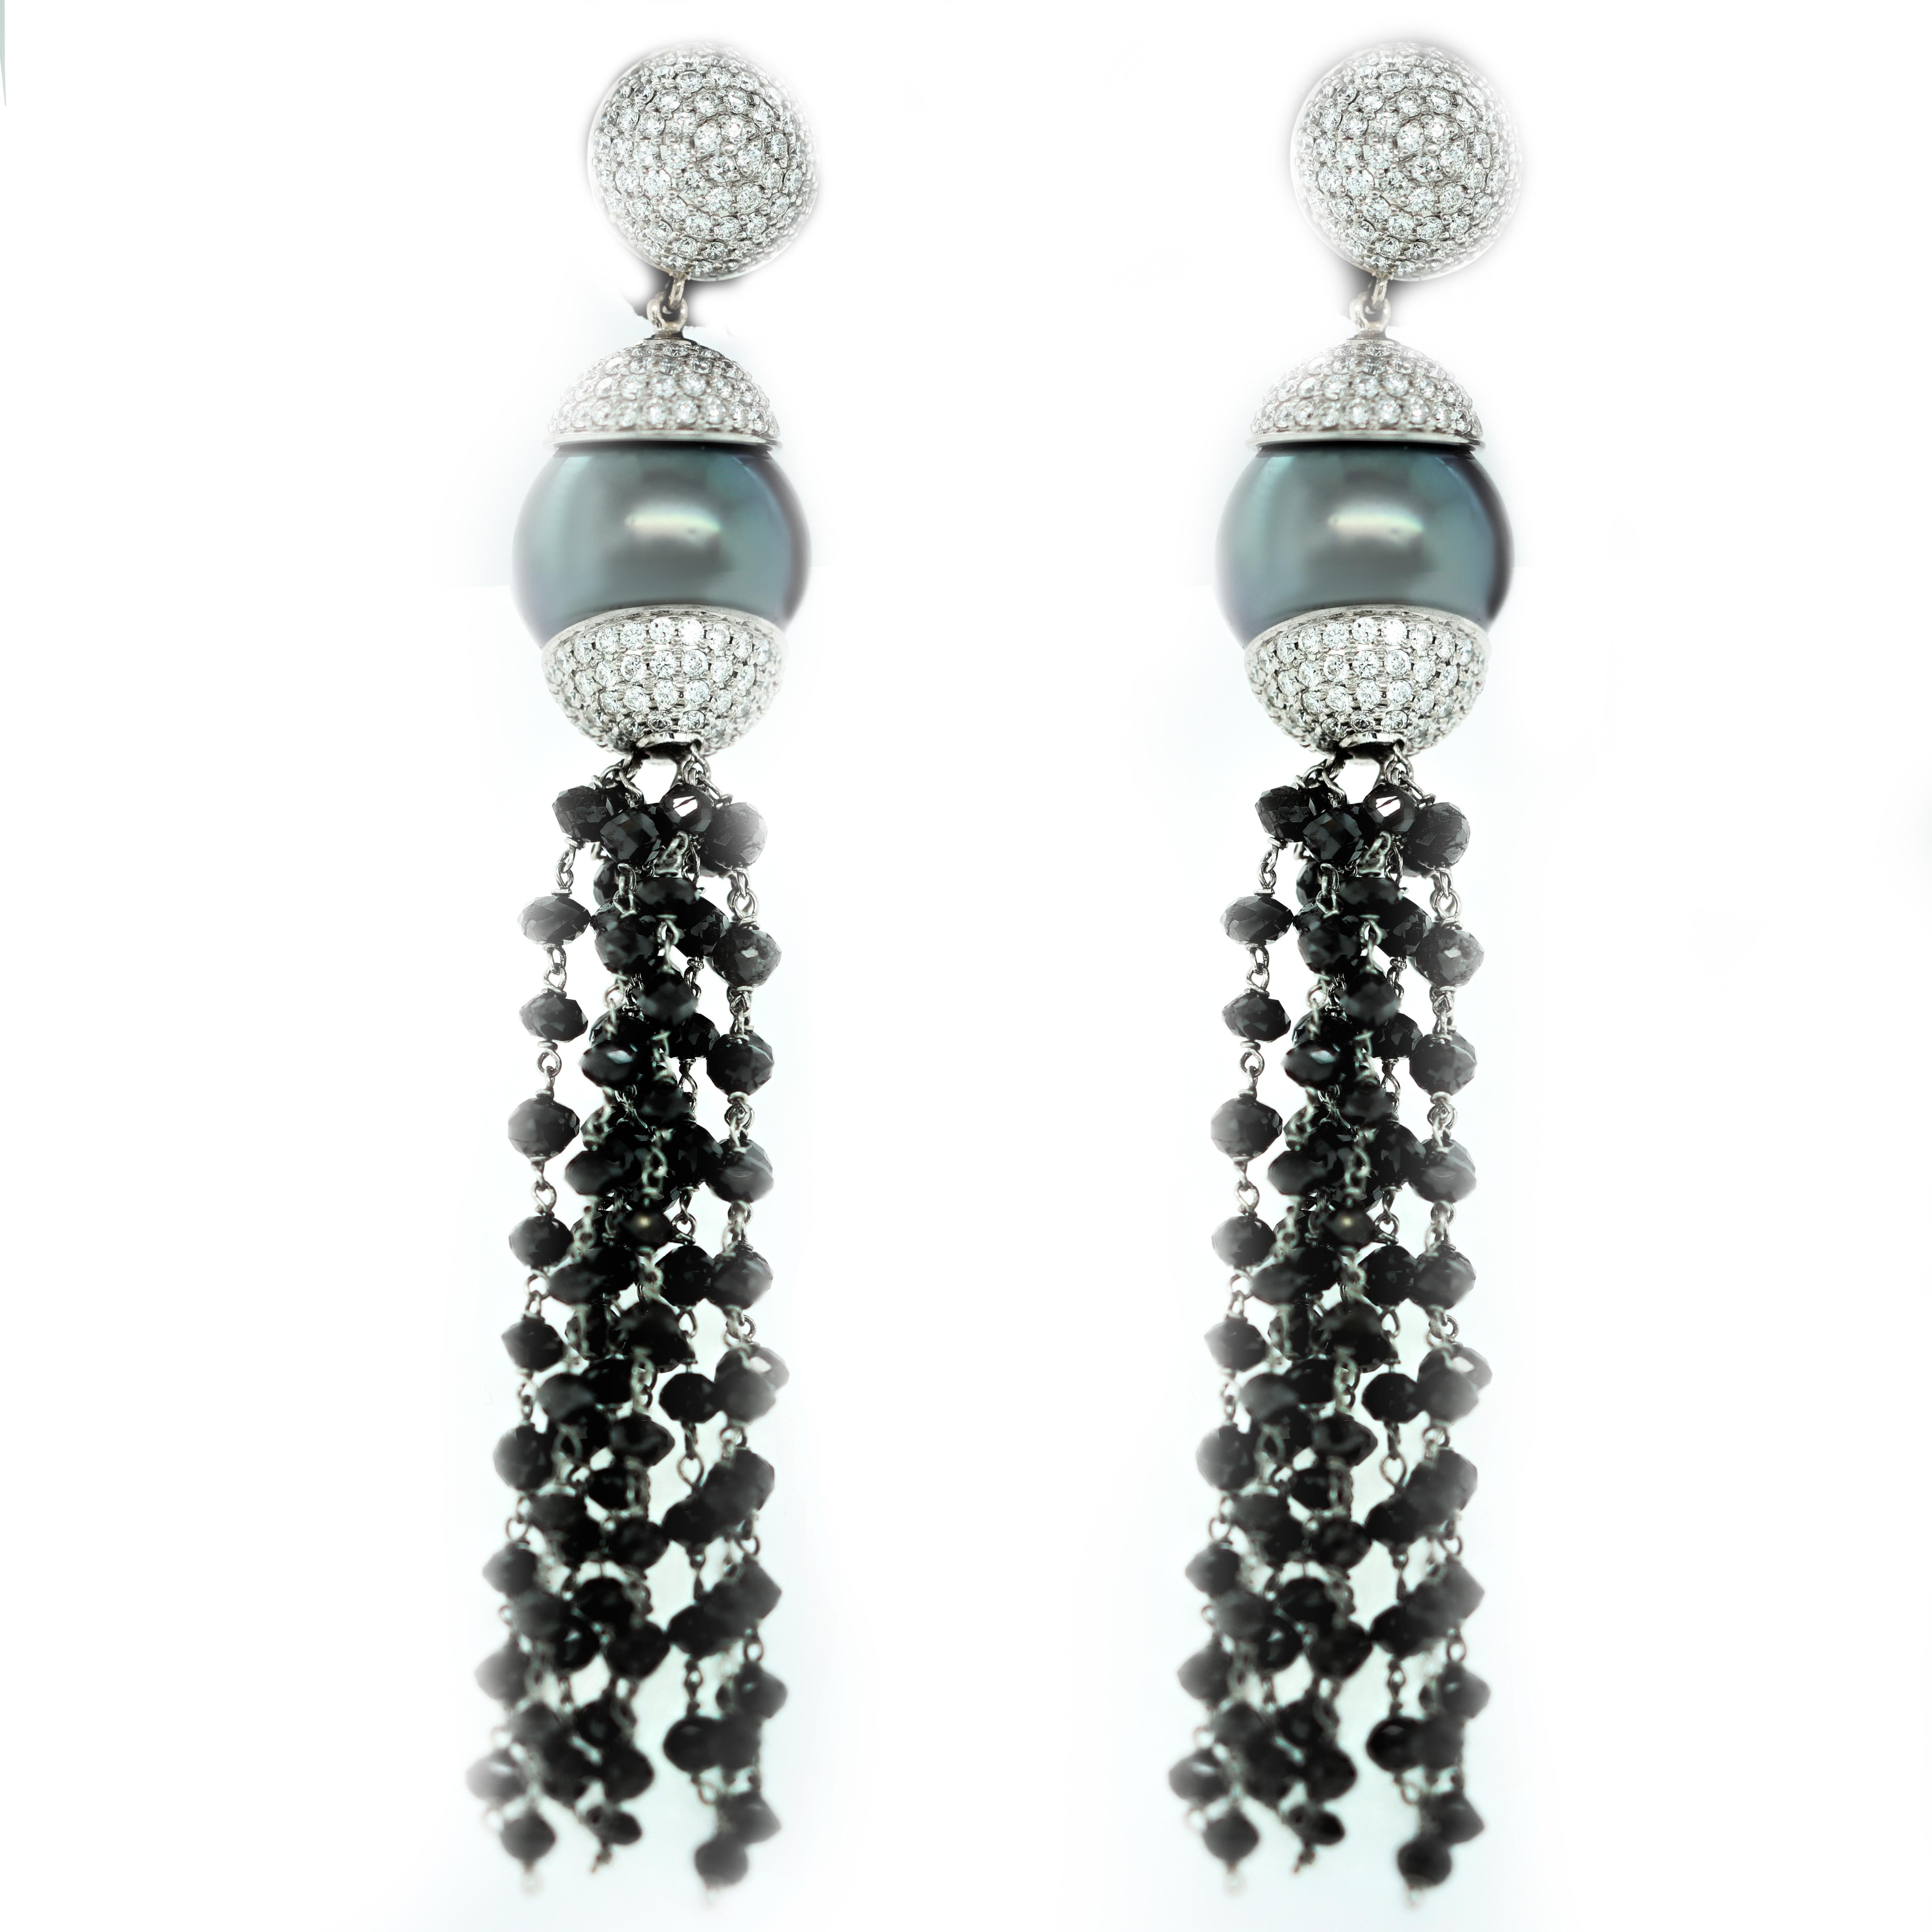 Black pearl and diamond chandelier fashion earrings 4.50 cts white diamonds and 28.00 cts black diamonds
